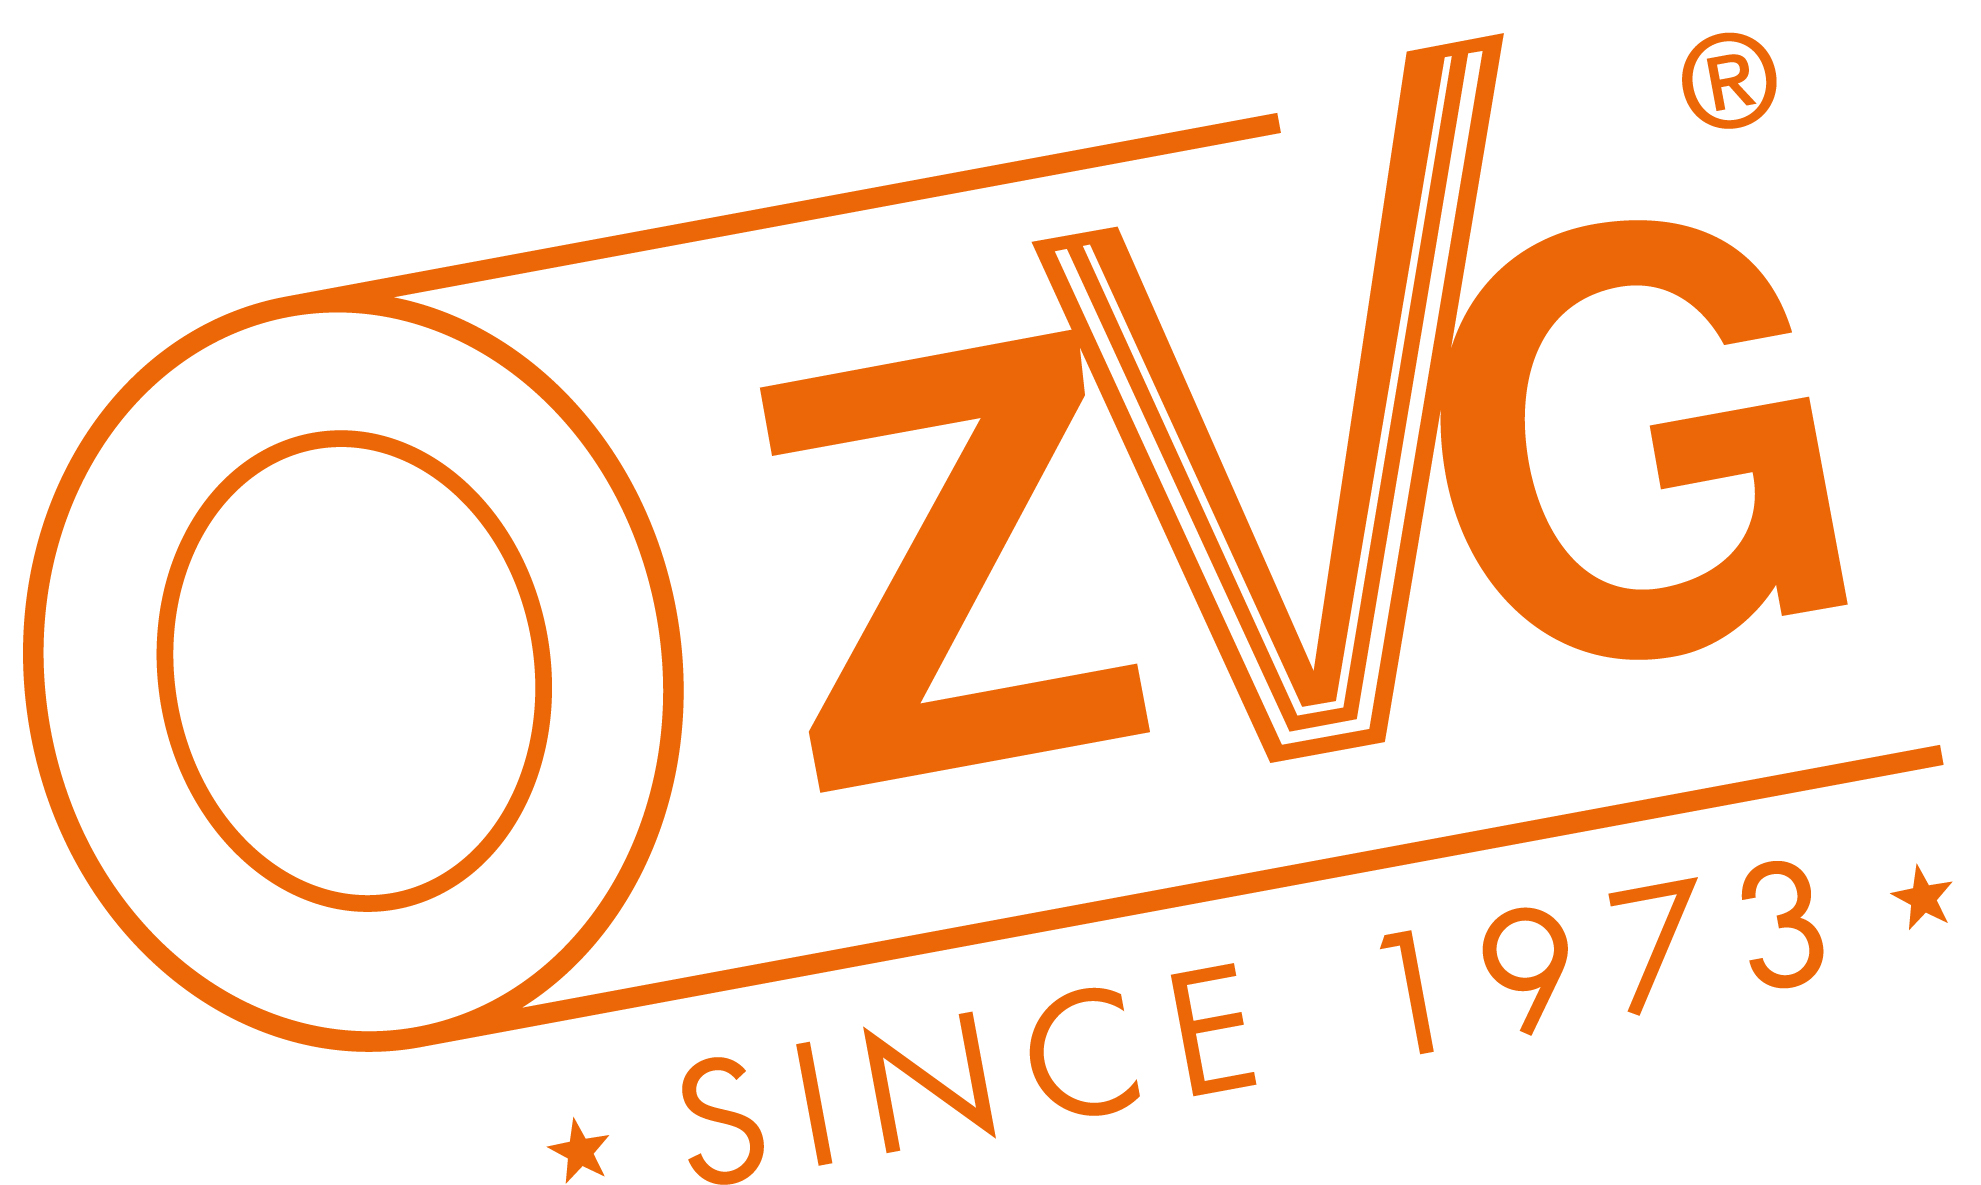 ZVG-Logo_1973_Orange